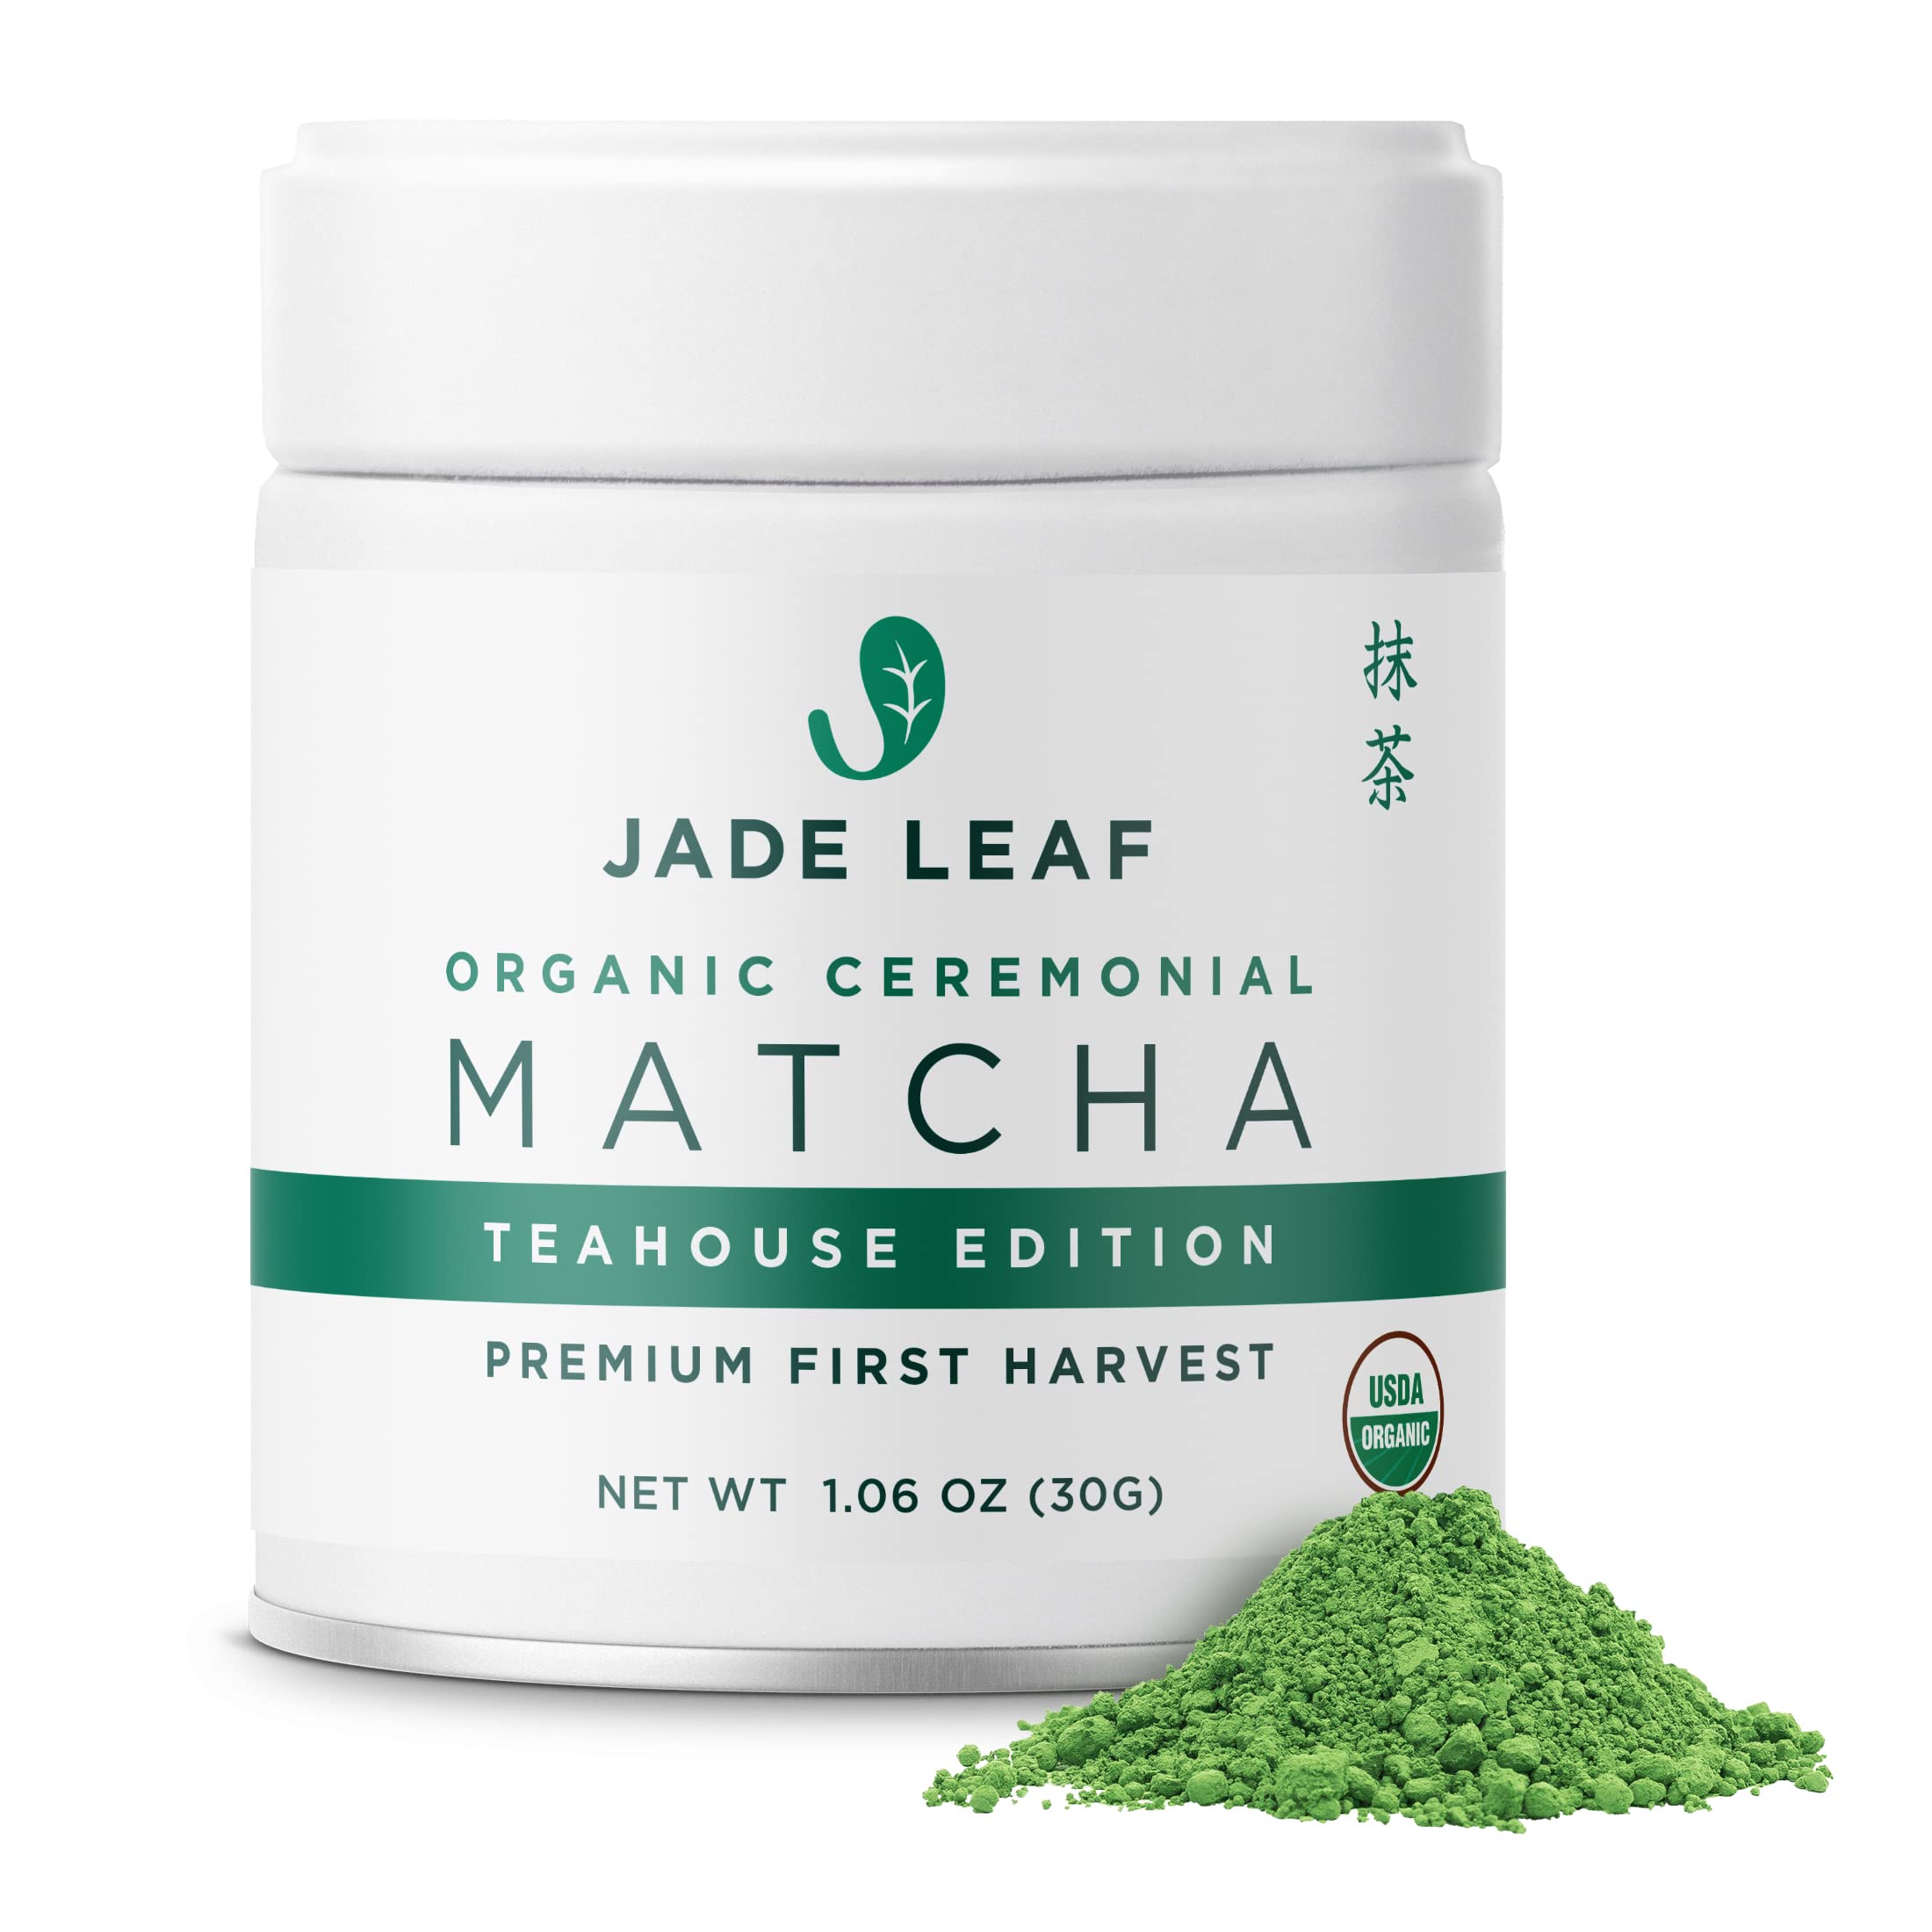 Book Cover Jade Leaf Matcha Green Tea Powder - USDA Organic - Ceremonial Grade (For Sipping as Tea) - Authentic Japanese Origin - Antioxidants, Energy, 1 Ounce